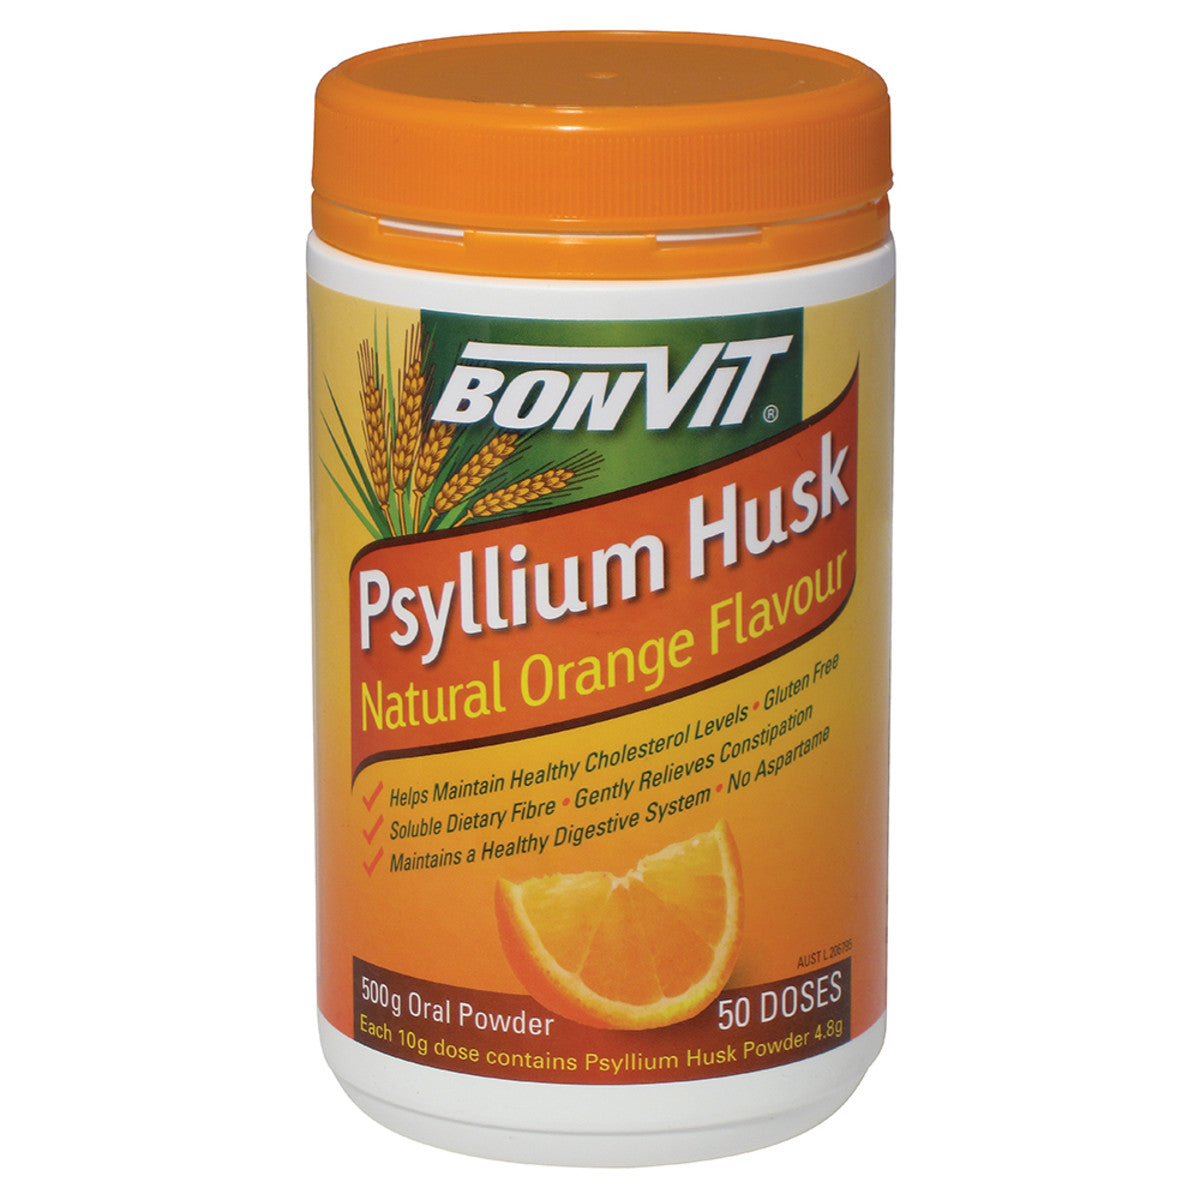 Bonvit Psyllium Husk 50 Serves 500g, Natural Orange Flavour